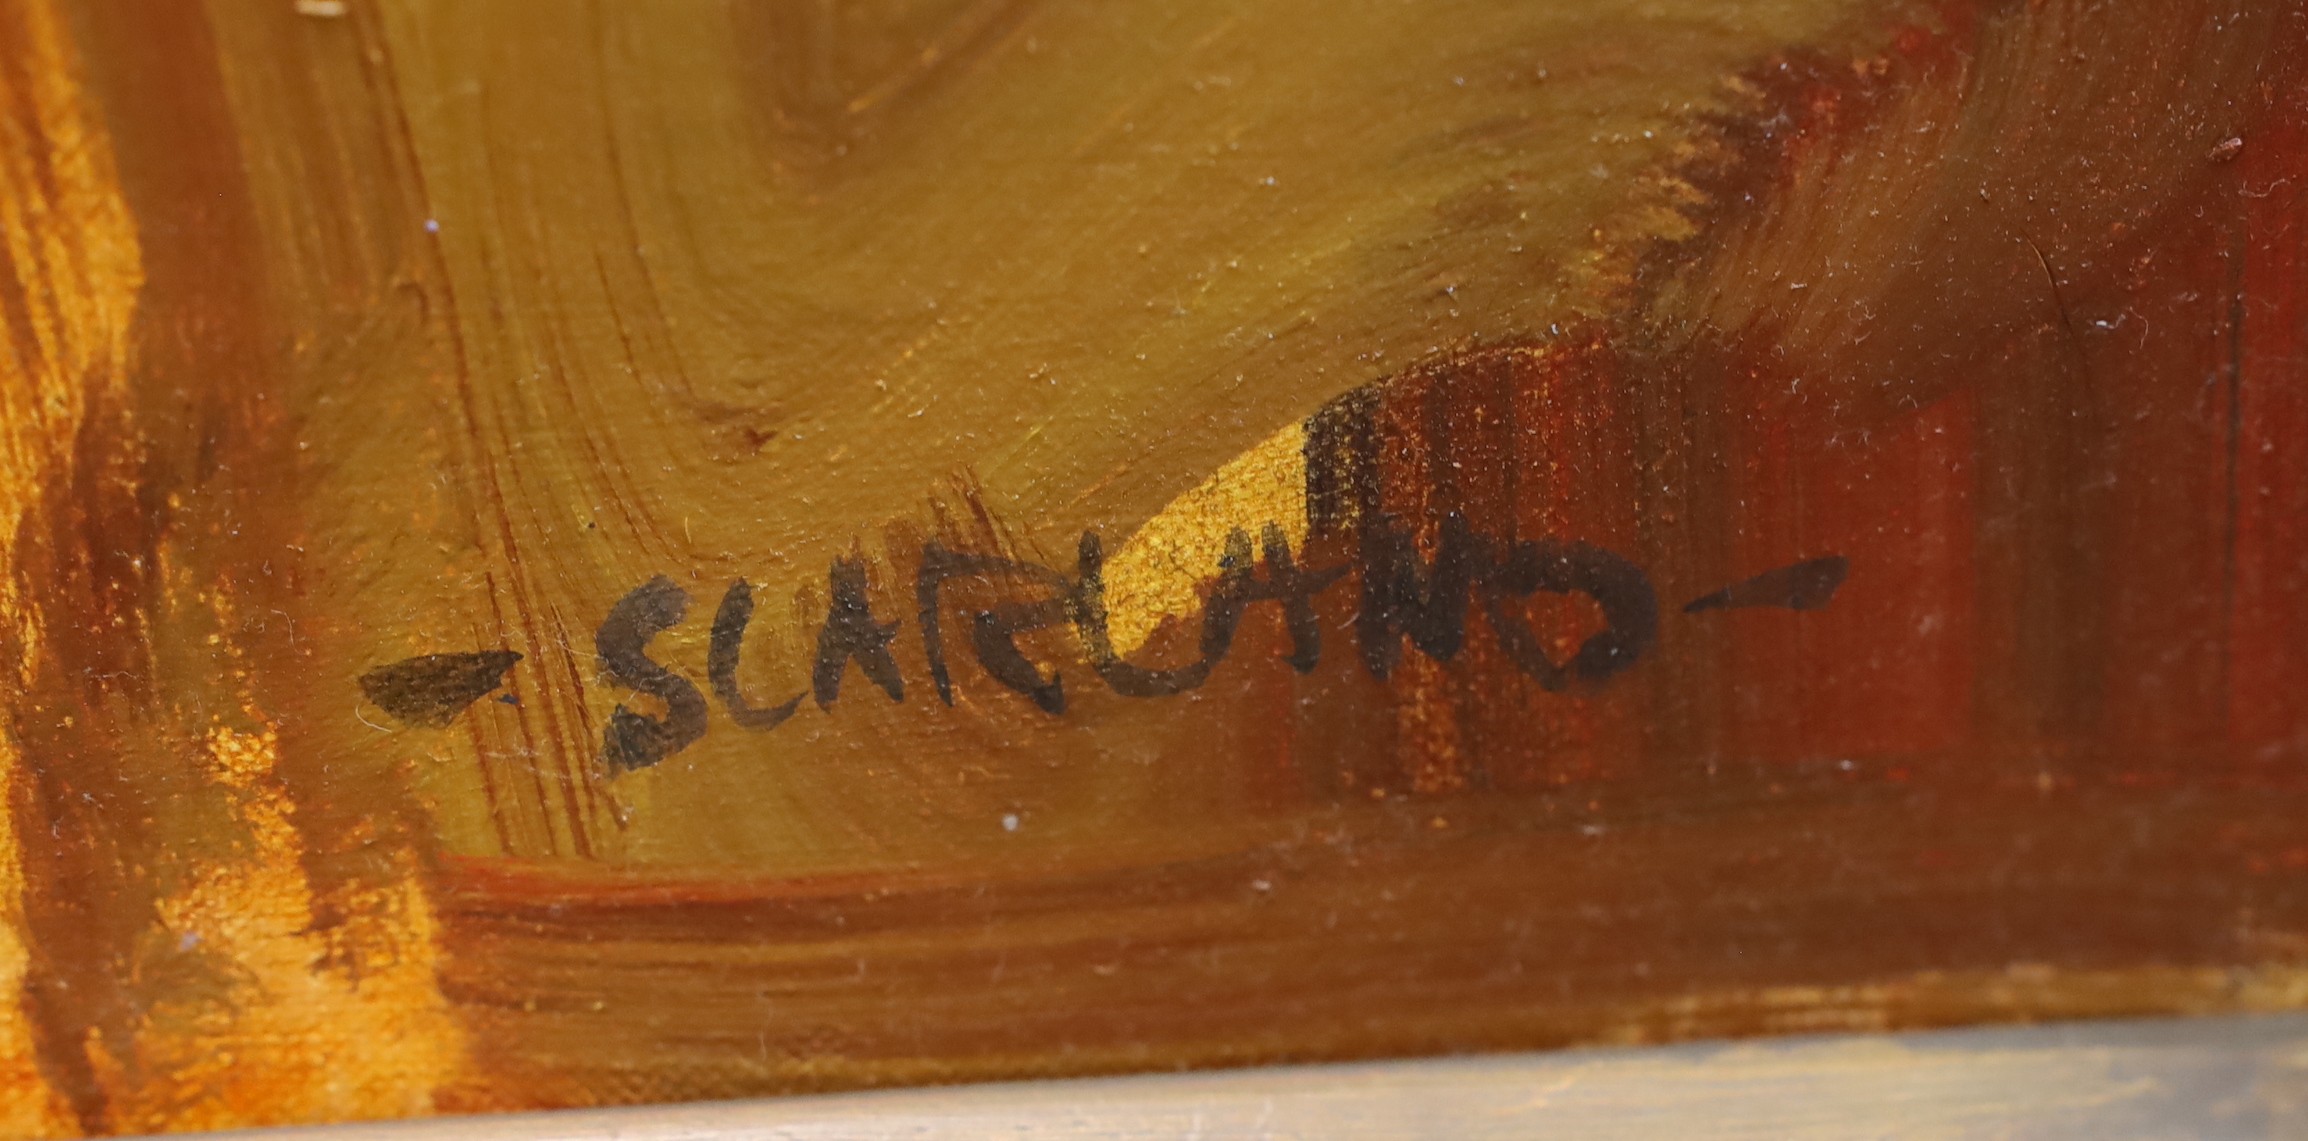 John Scarland (b.1947), oil on board, 'The Mirror', signed, 80 x 120cm